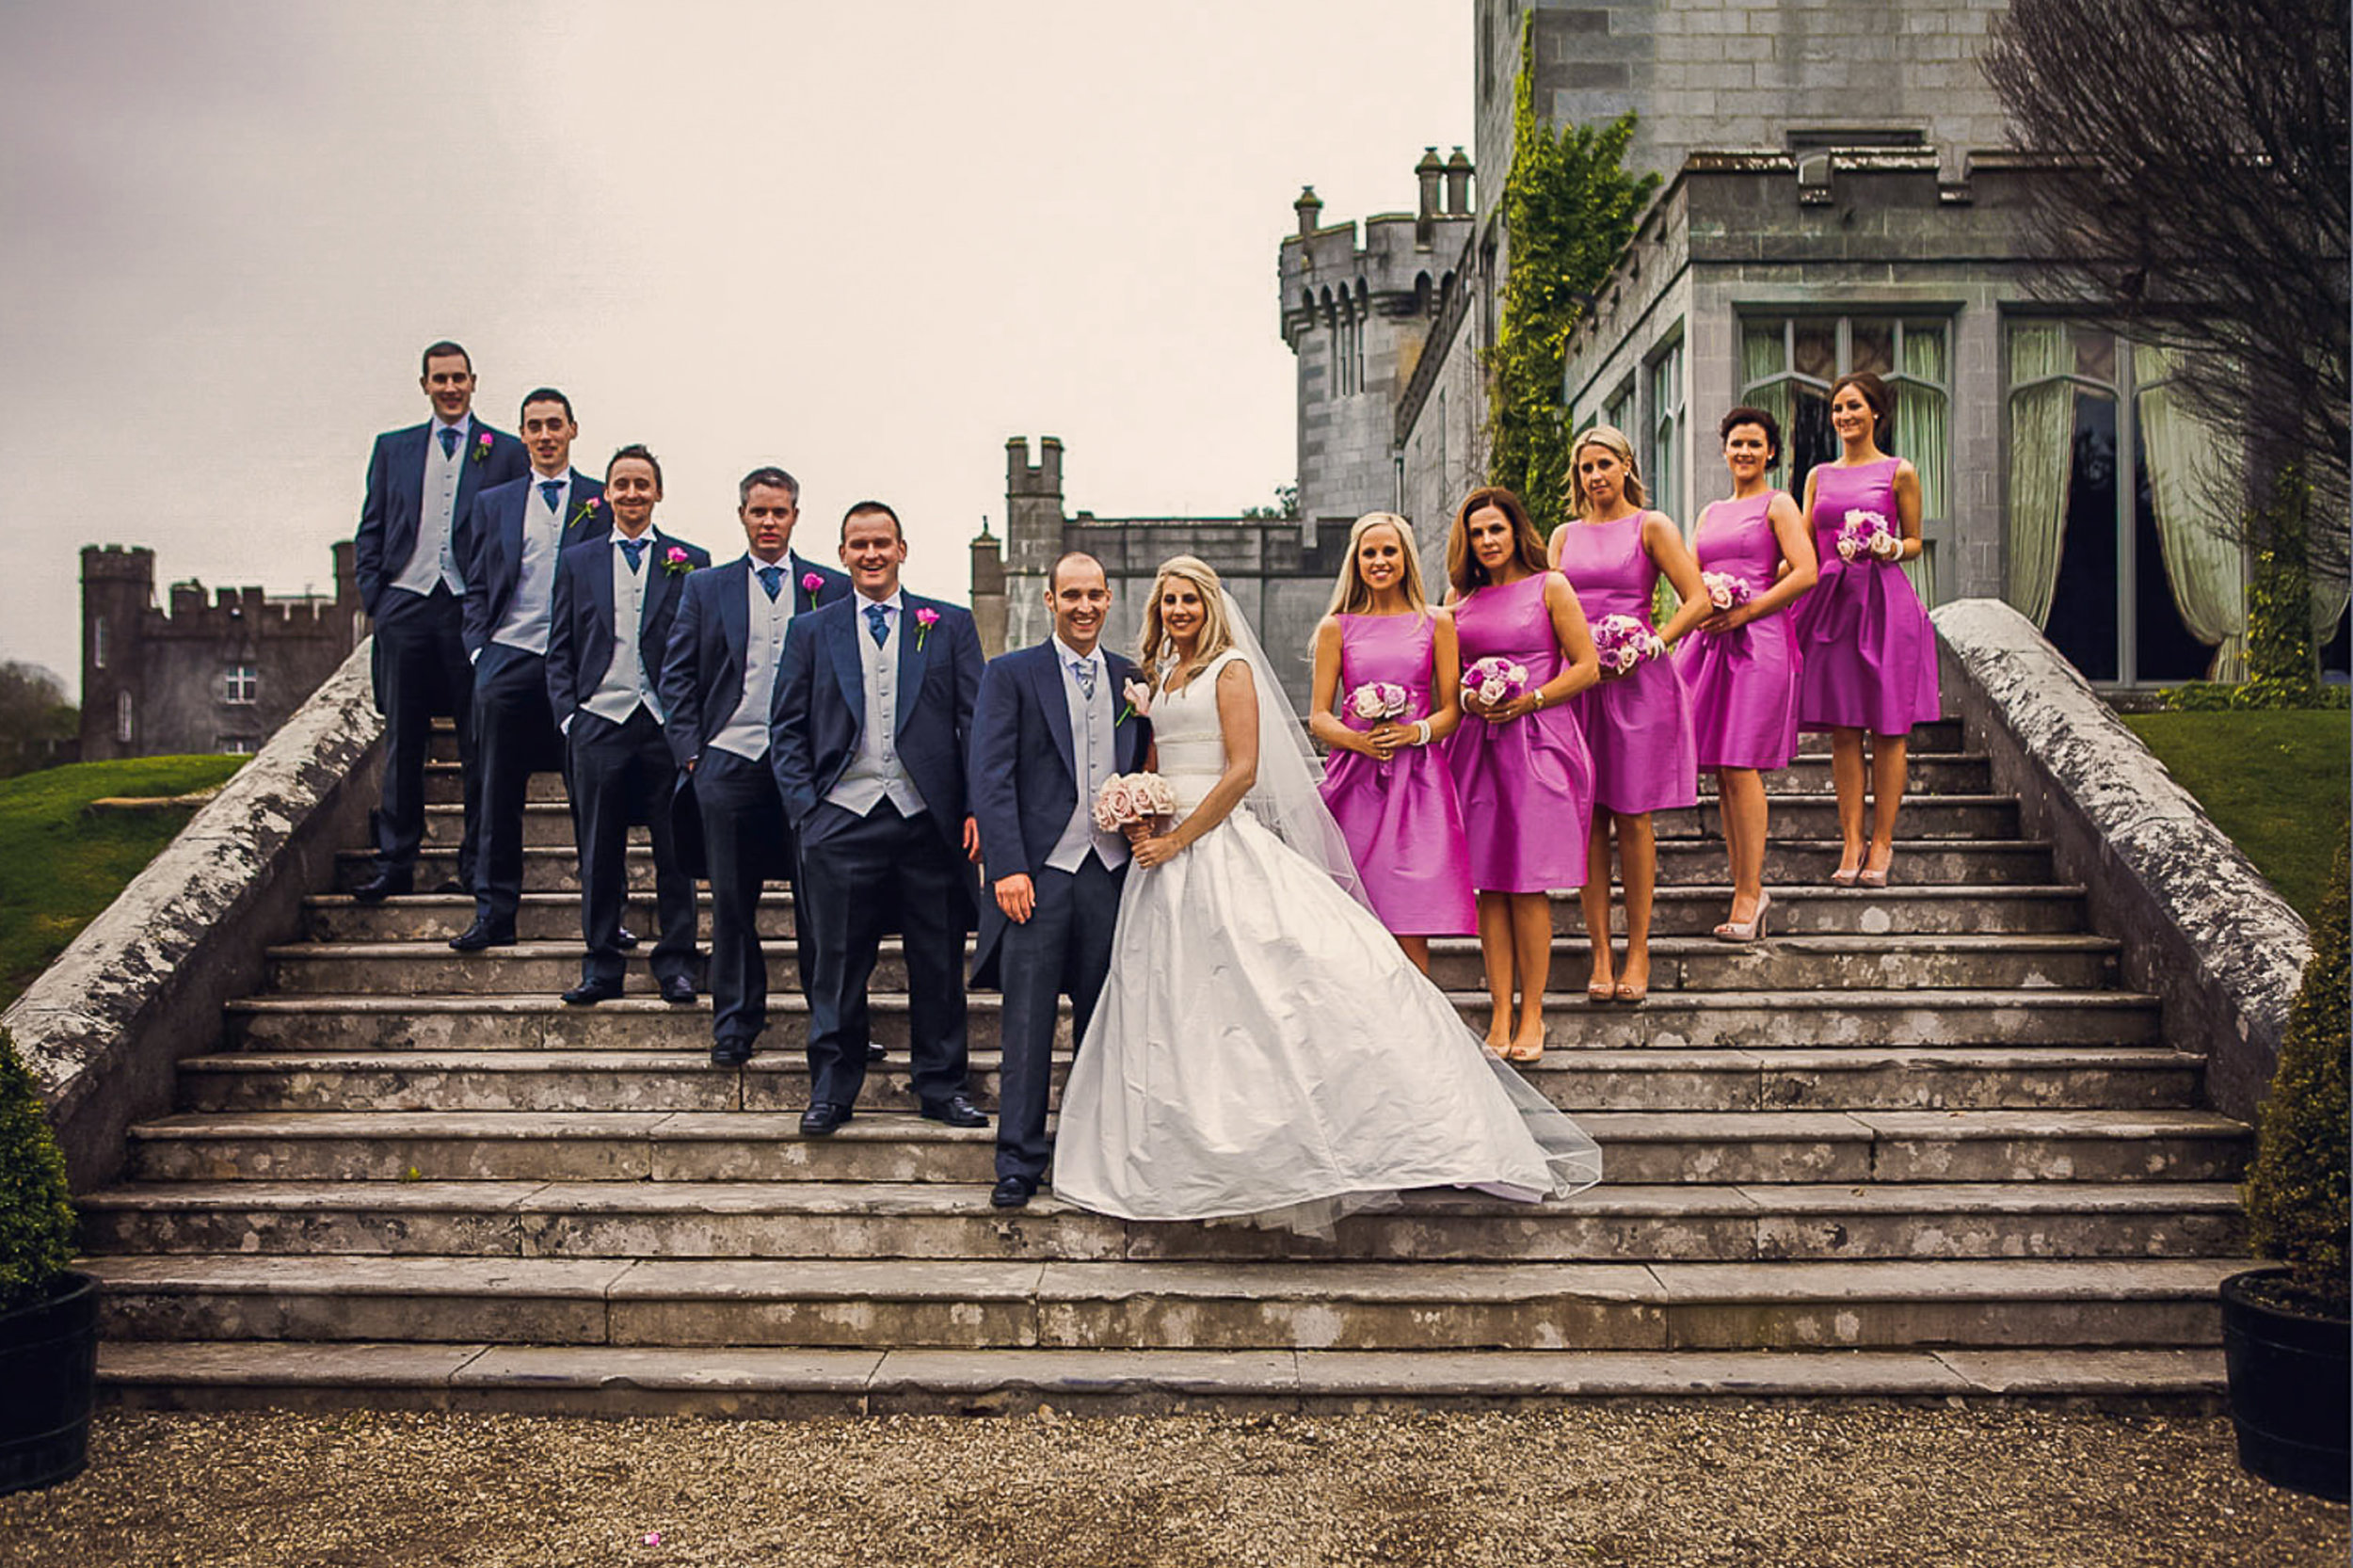 Dromoland Castle Wedding Photography. Dromoland Castle County Clare, Ireland. Wedding Party Grooms men and brides maids